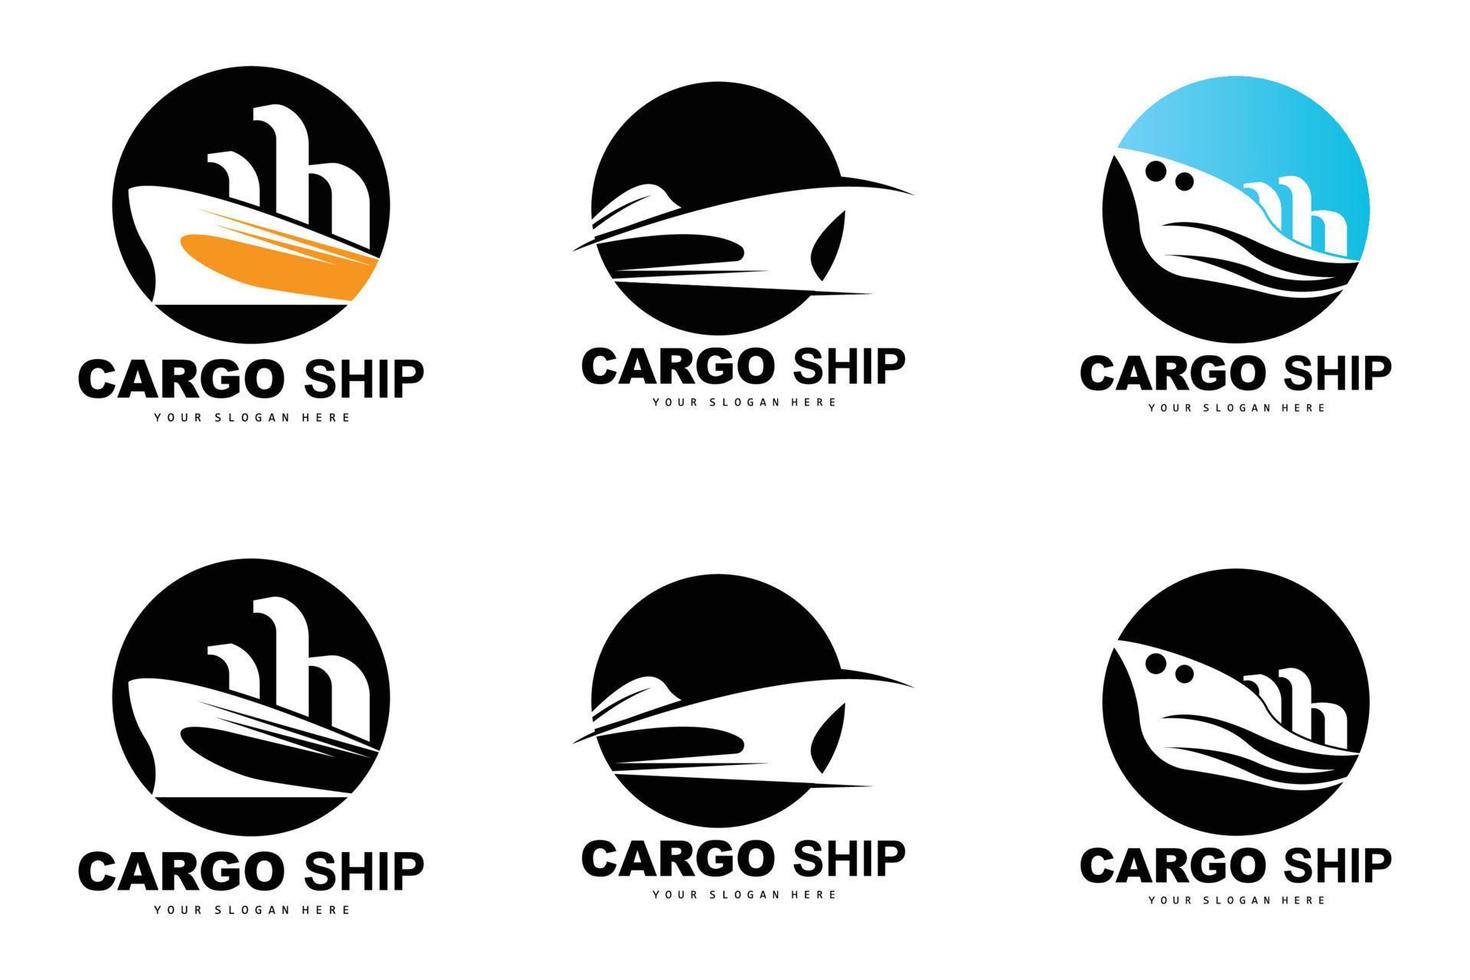 logotipo de buque de carga, vector de buque de carga rápida, velero, diseño para empresa de fabricación de buques, navegación fluvial, vehículos marinos, transporte, logística